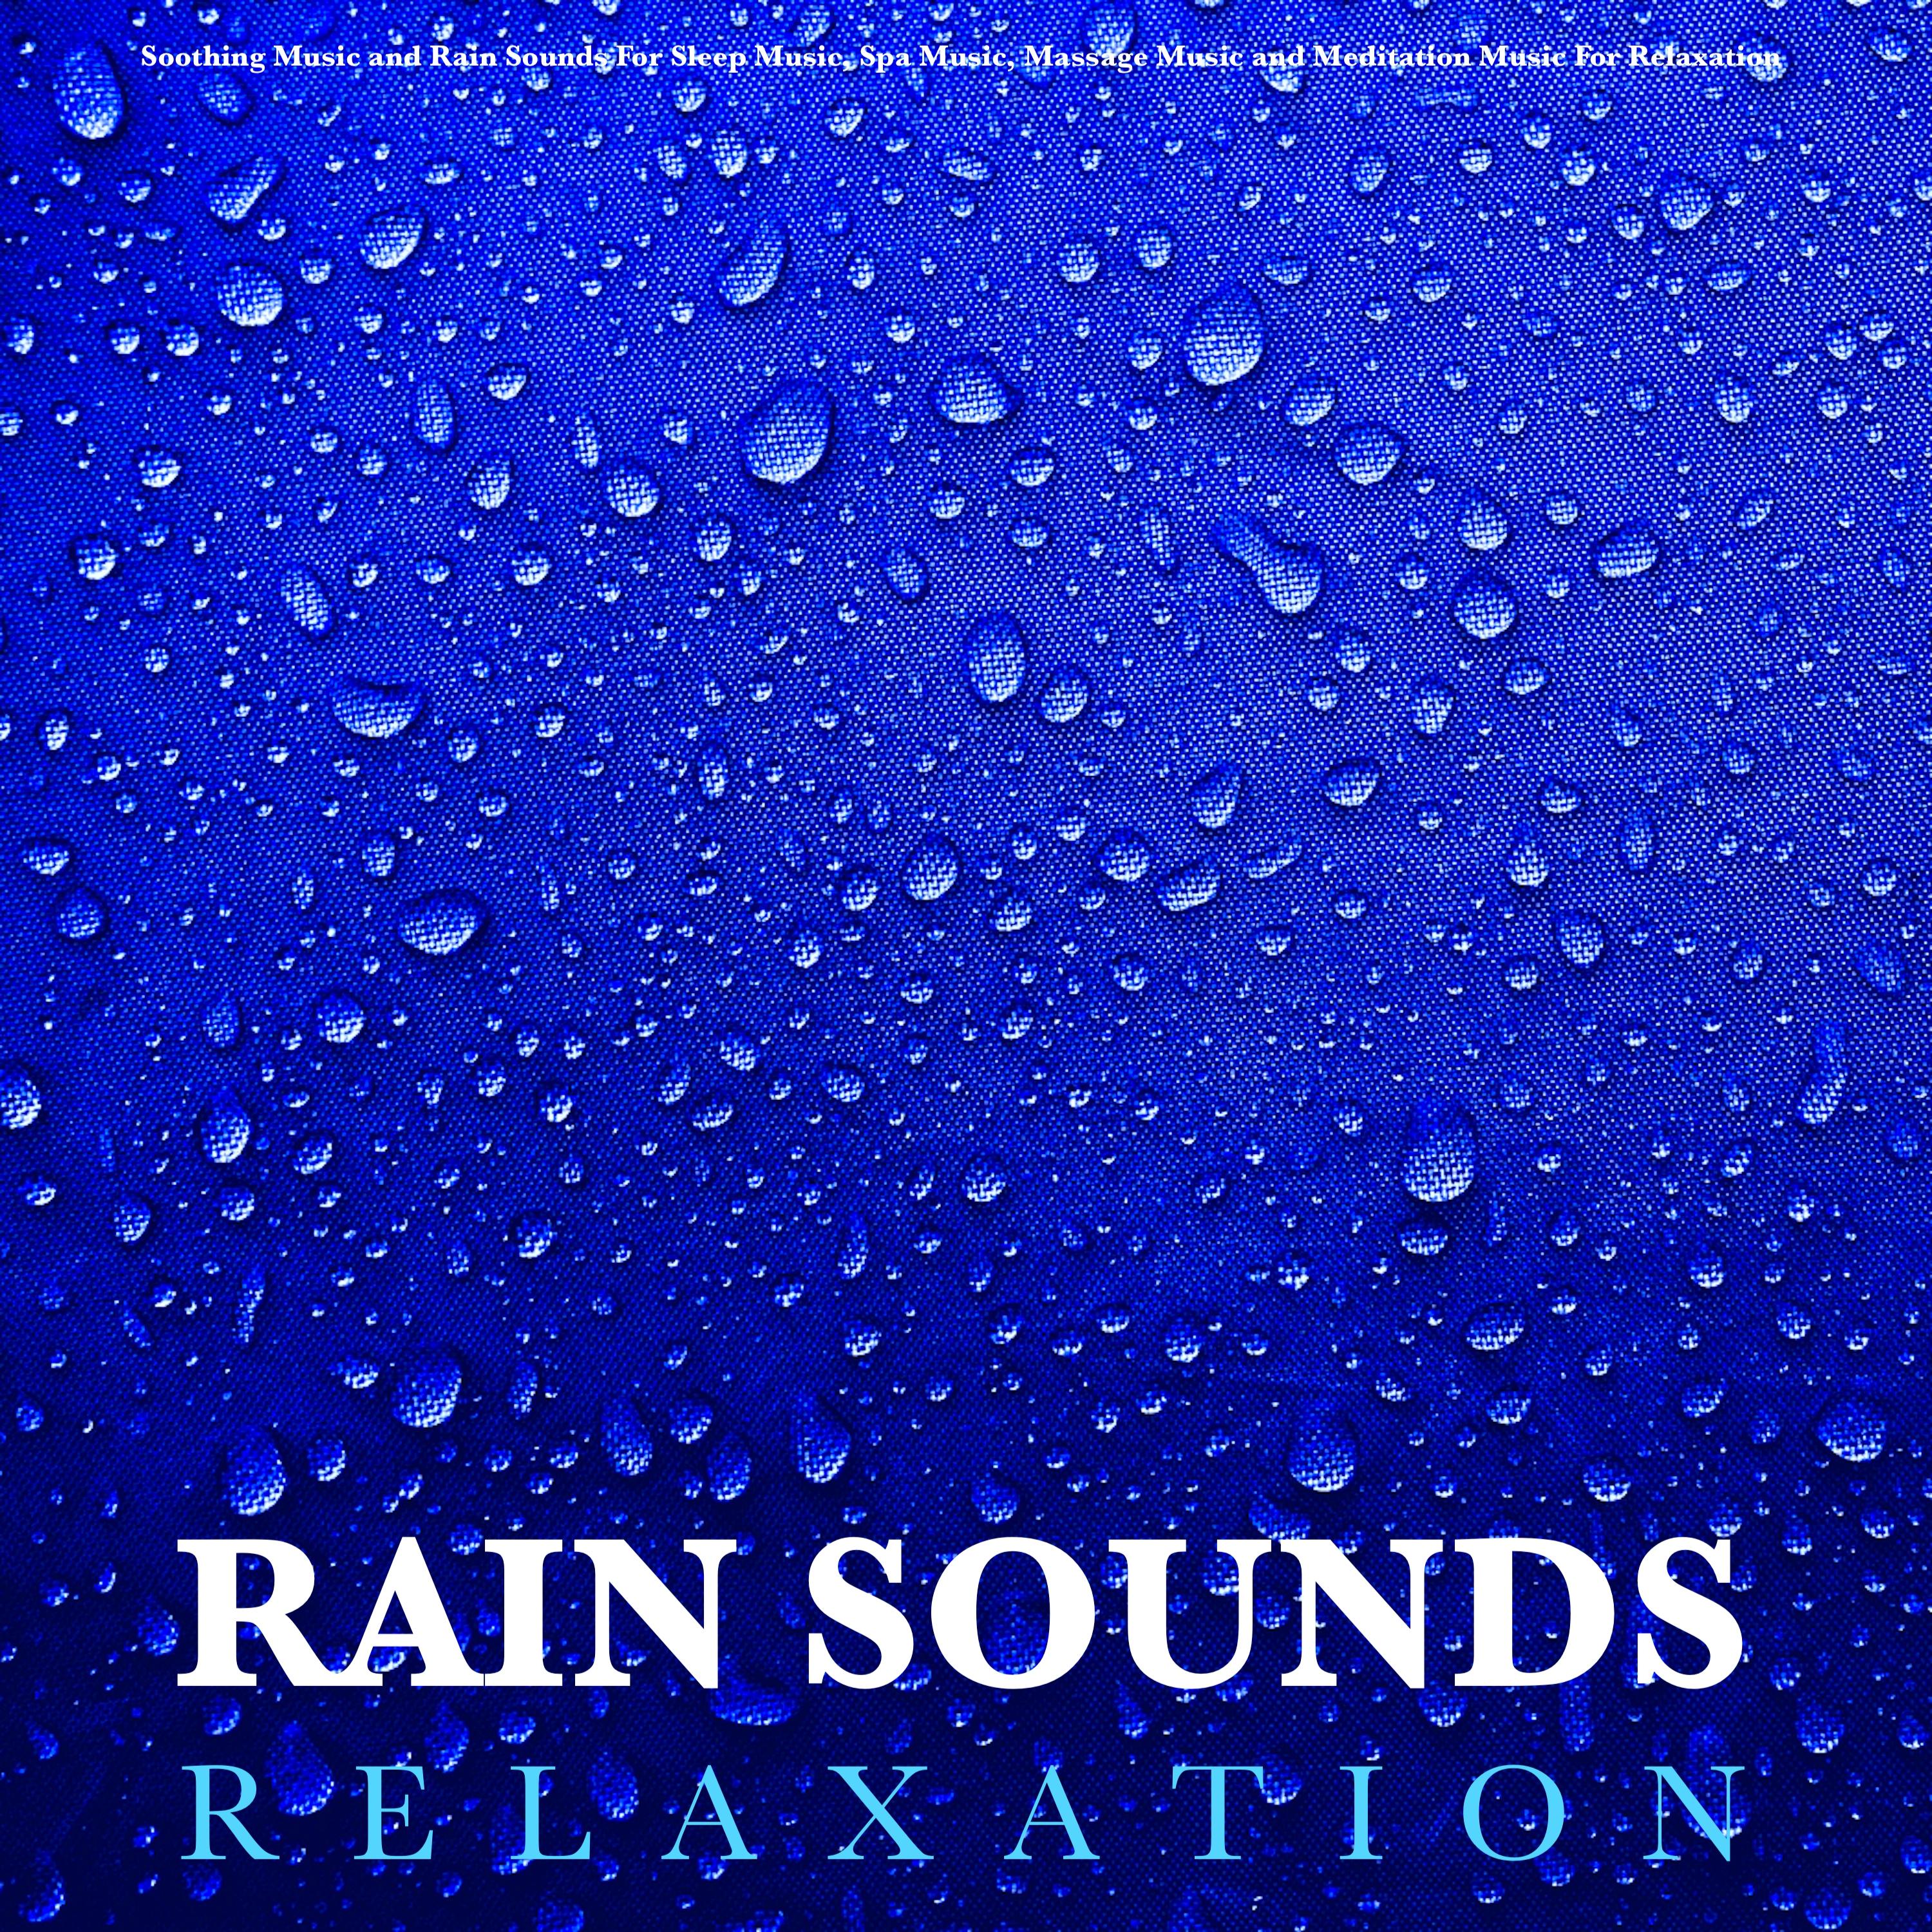 Calming Rain Sounds For Sleep